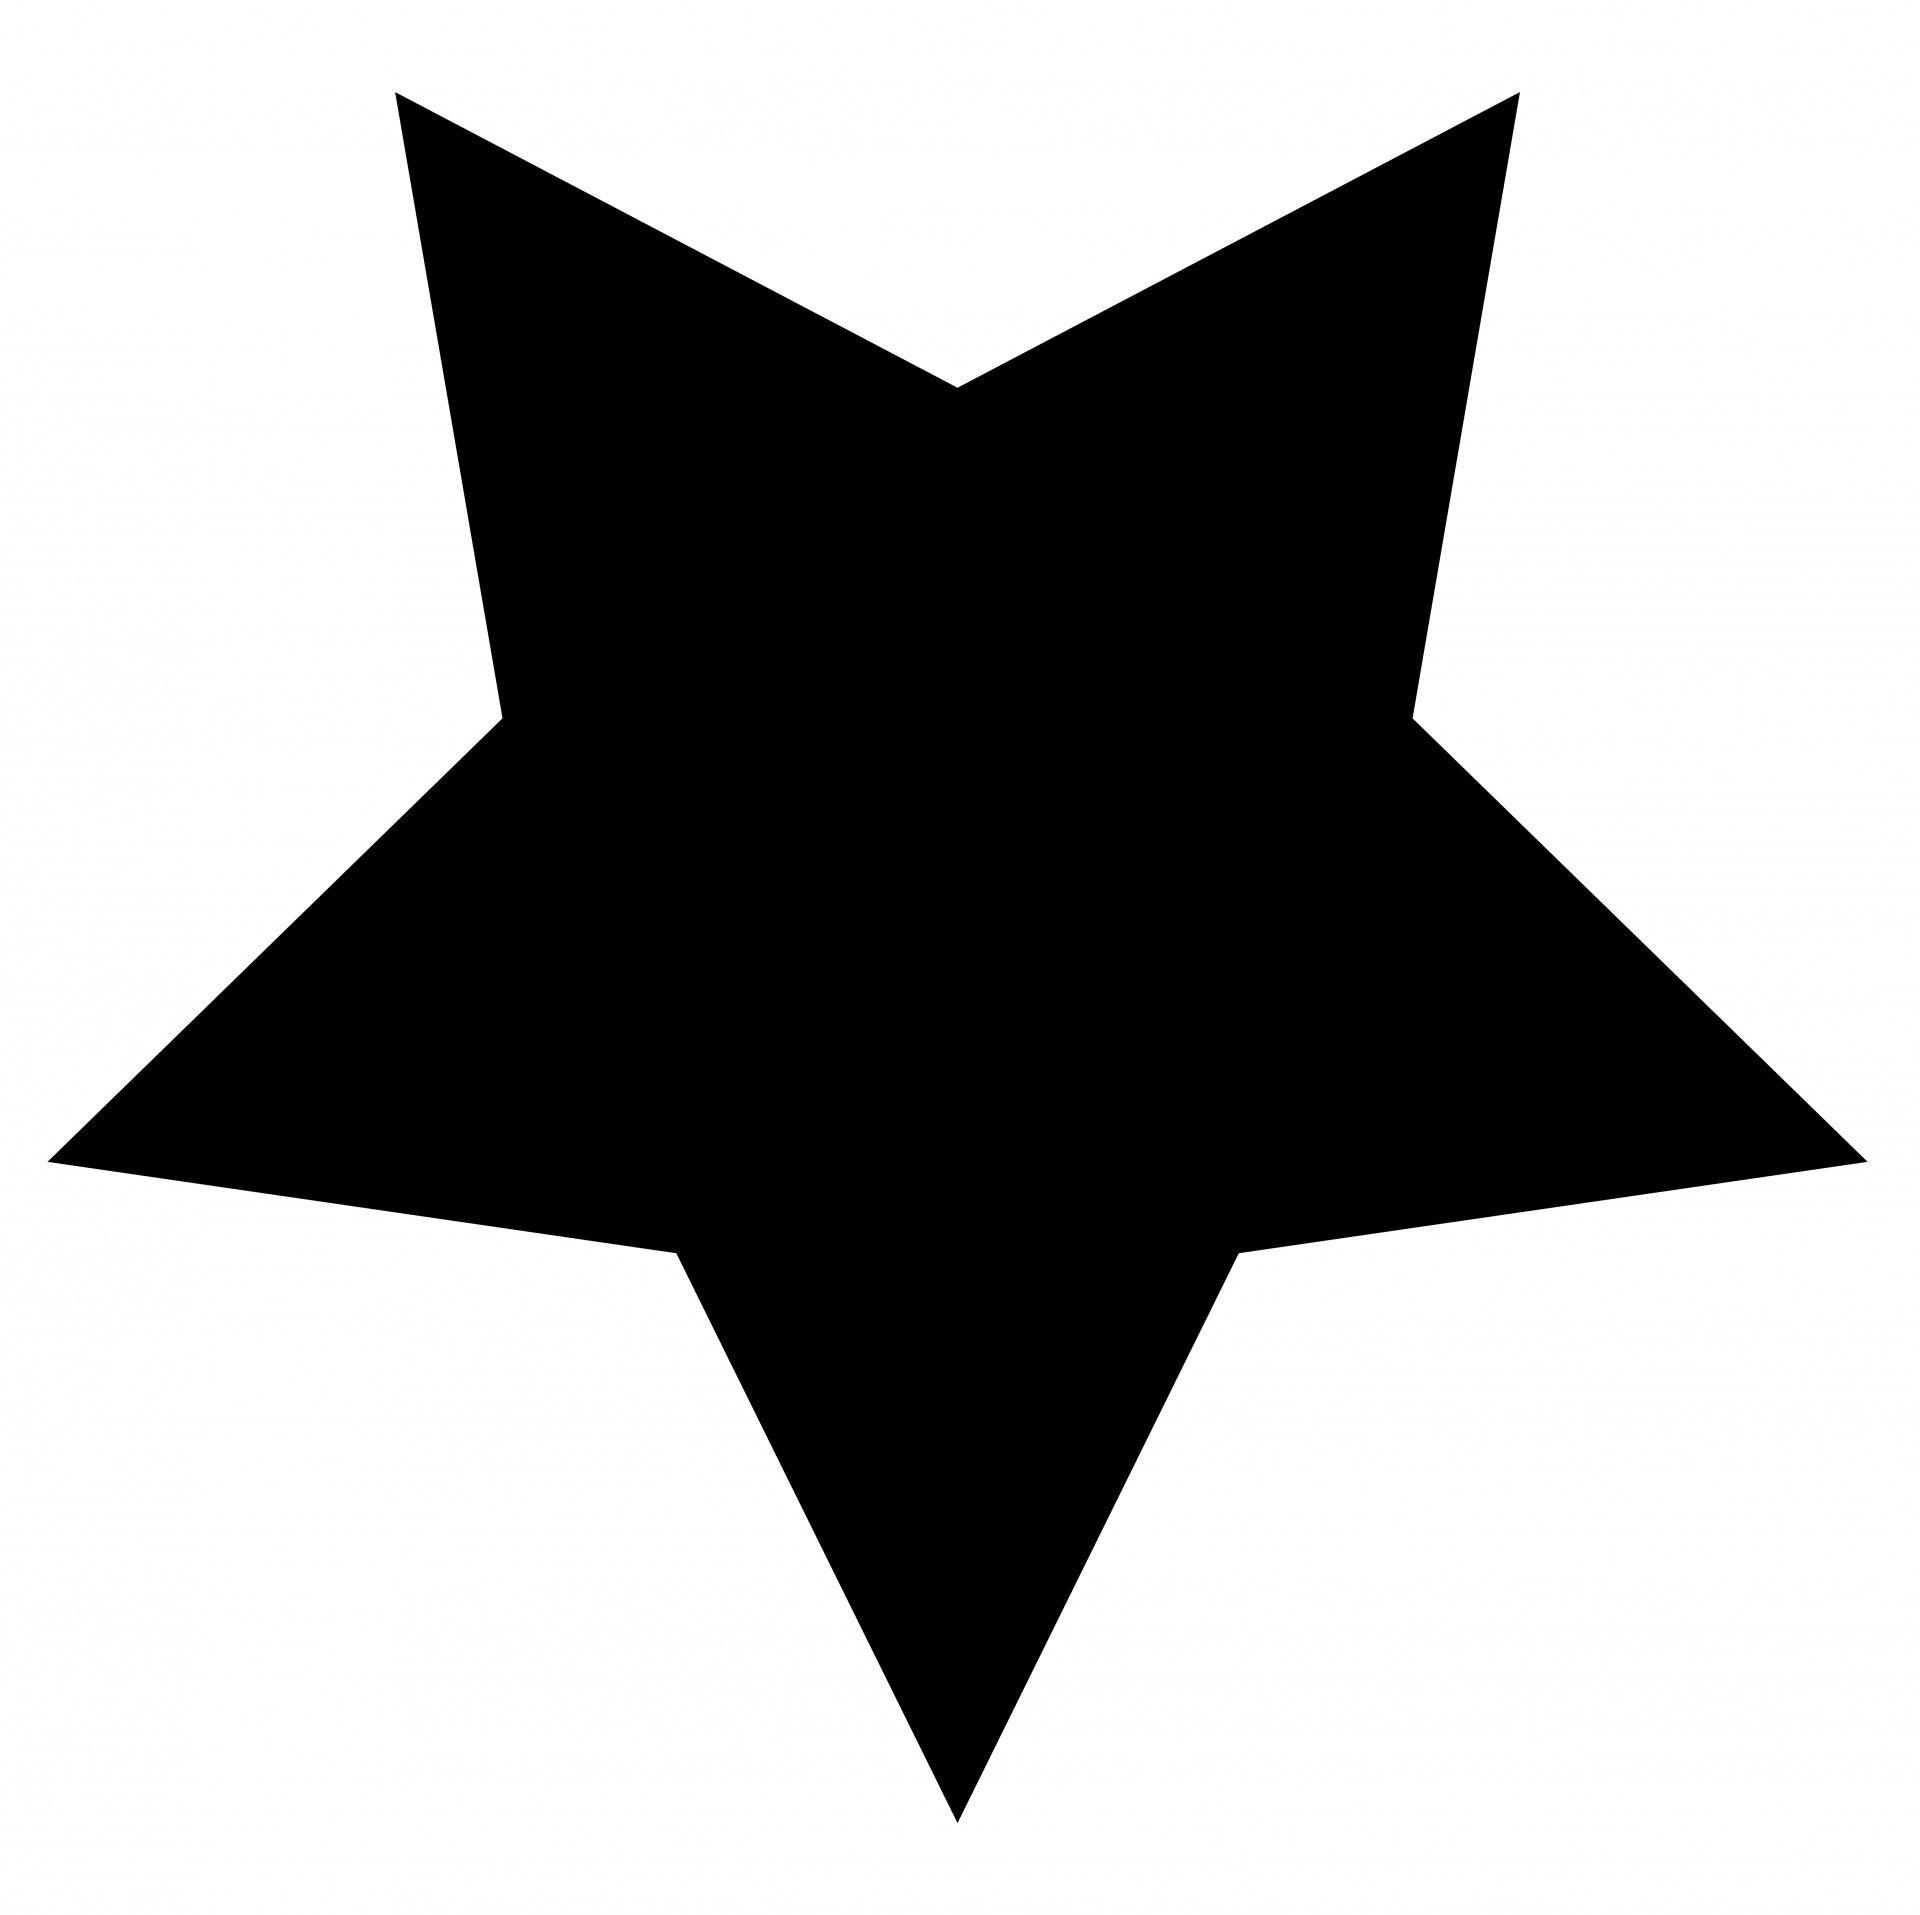 Star Black and White Logo - Free Black Star Cliparts, Download Free Clip Art, Free Clip Art on ...